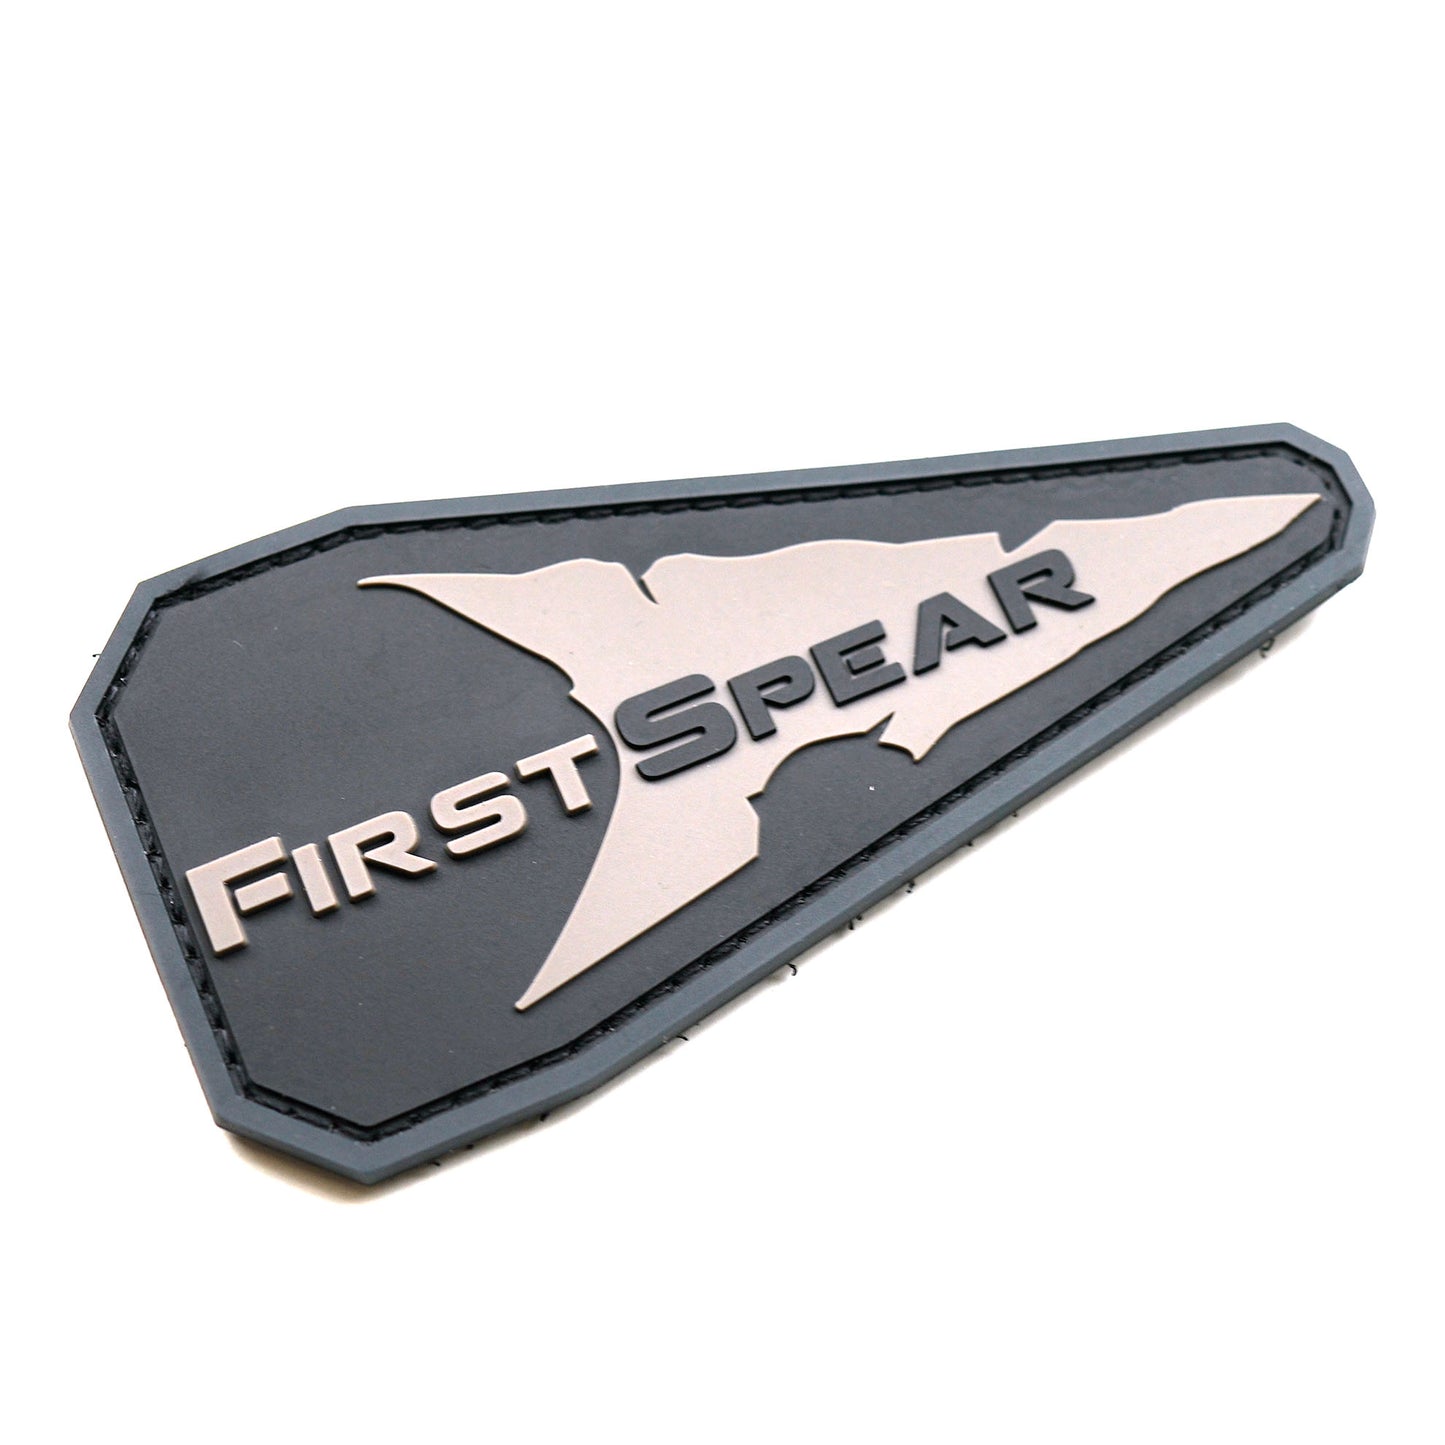 FirstSpear Logo PVC Patch